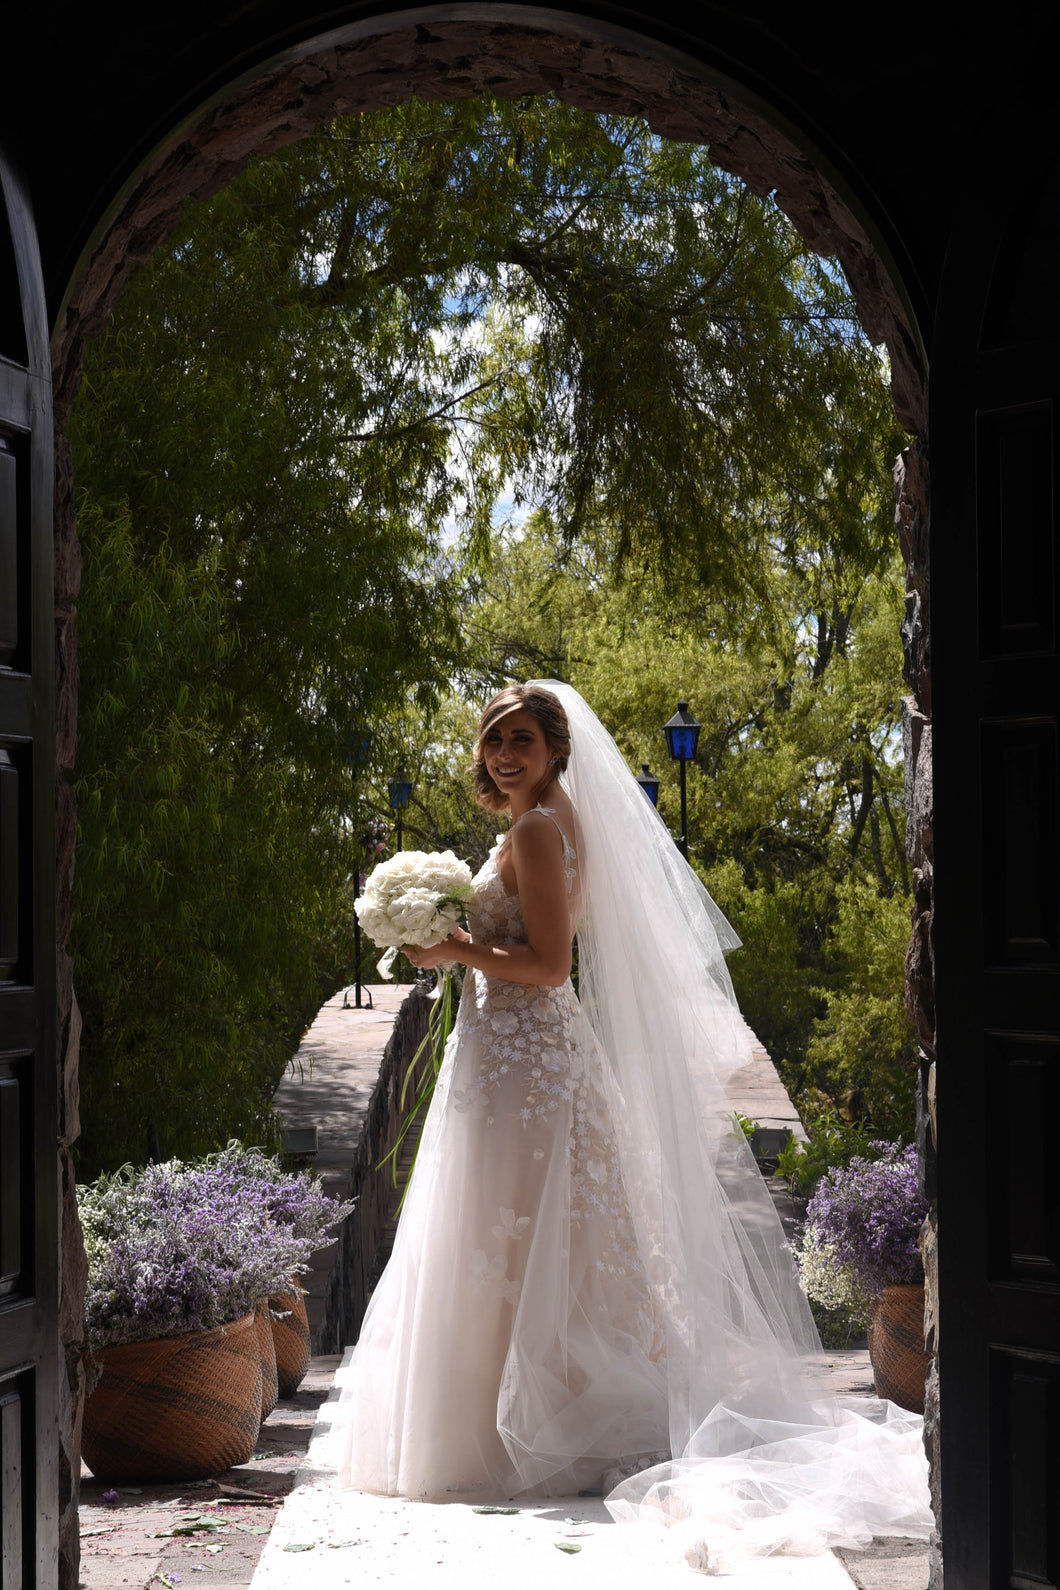 Mira Zwillinger 'Julie' size 6 new wedding dress side view on bride